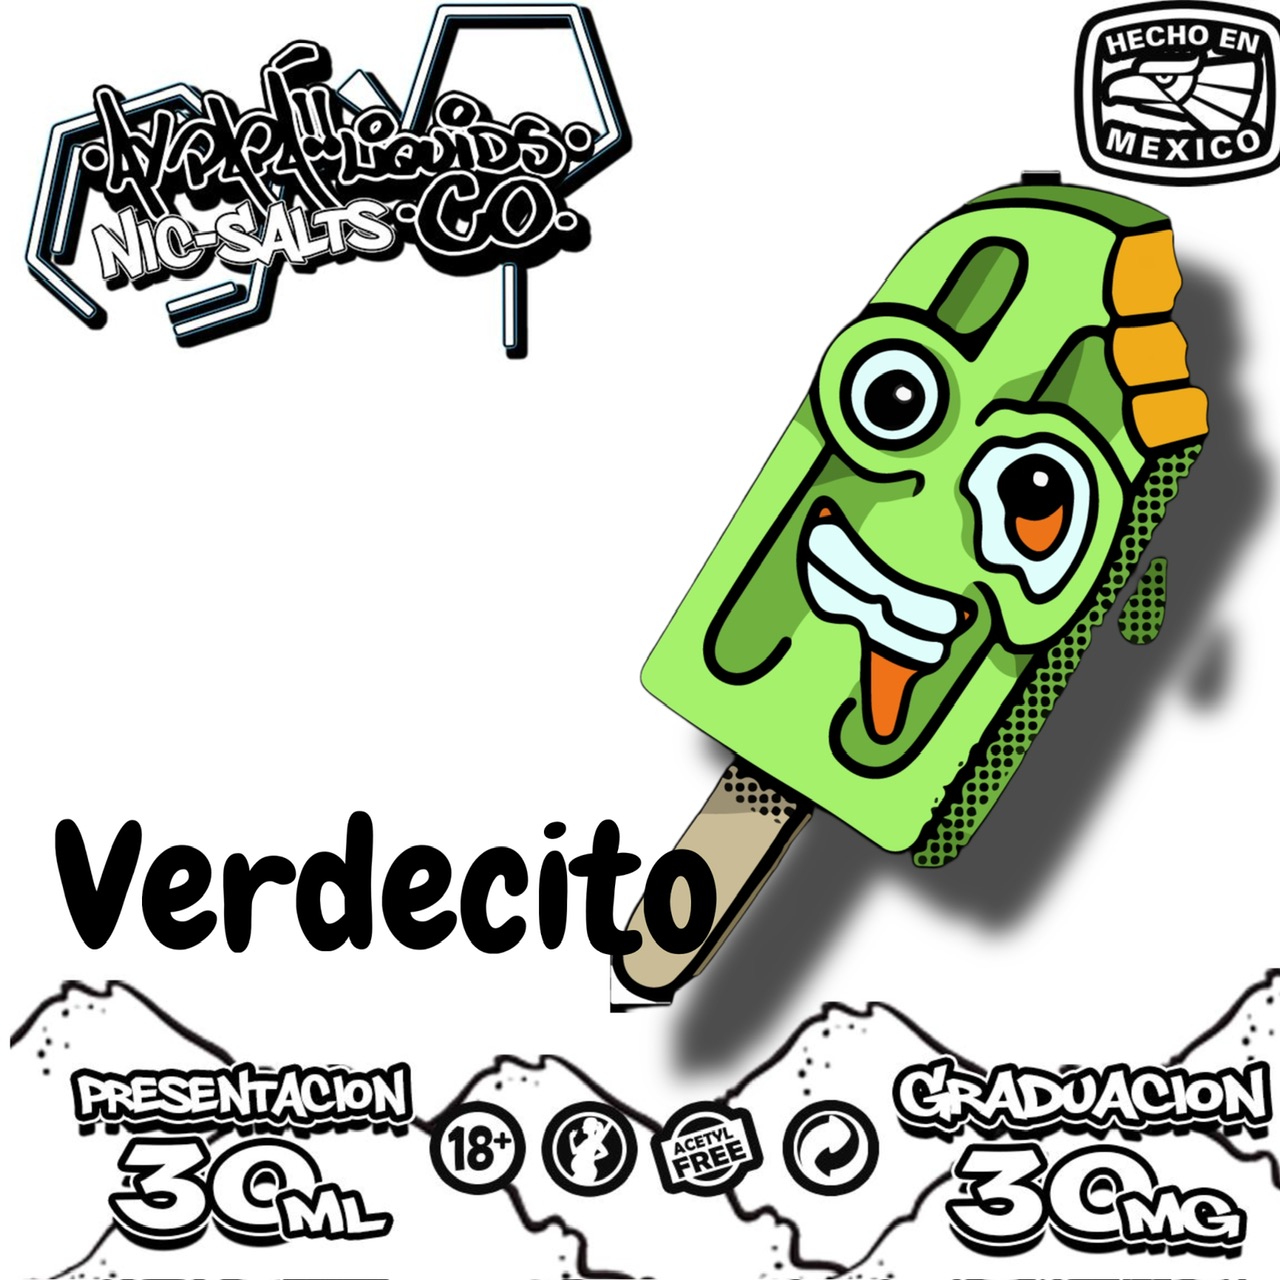 Verdecito Nicsalt